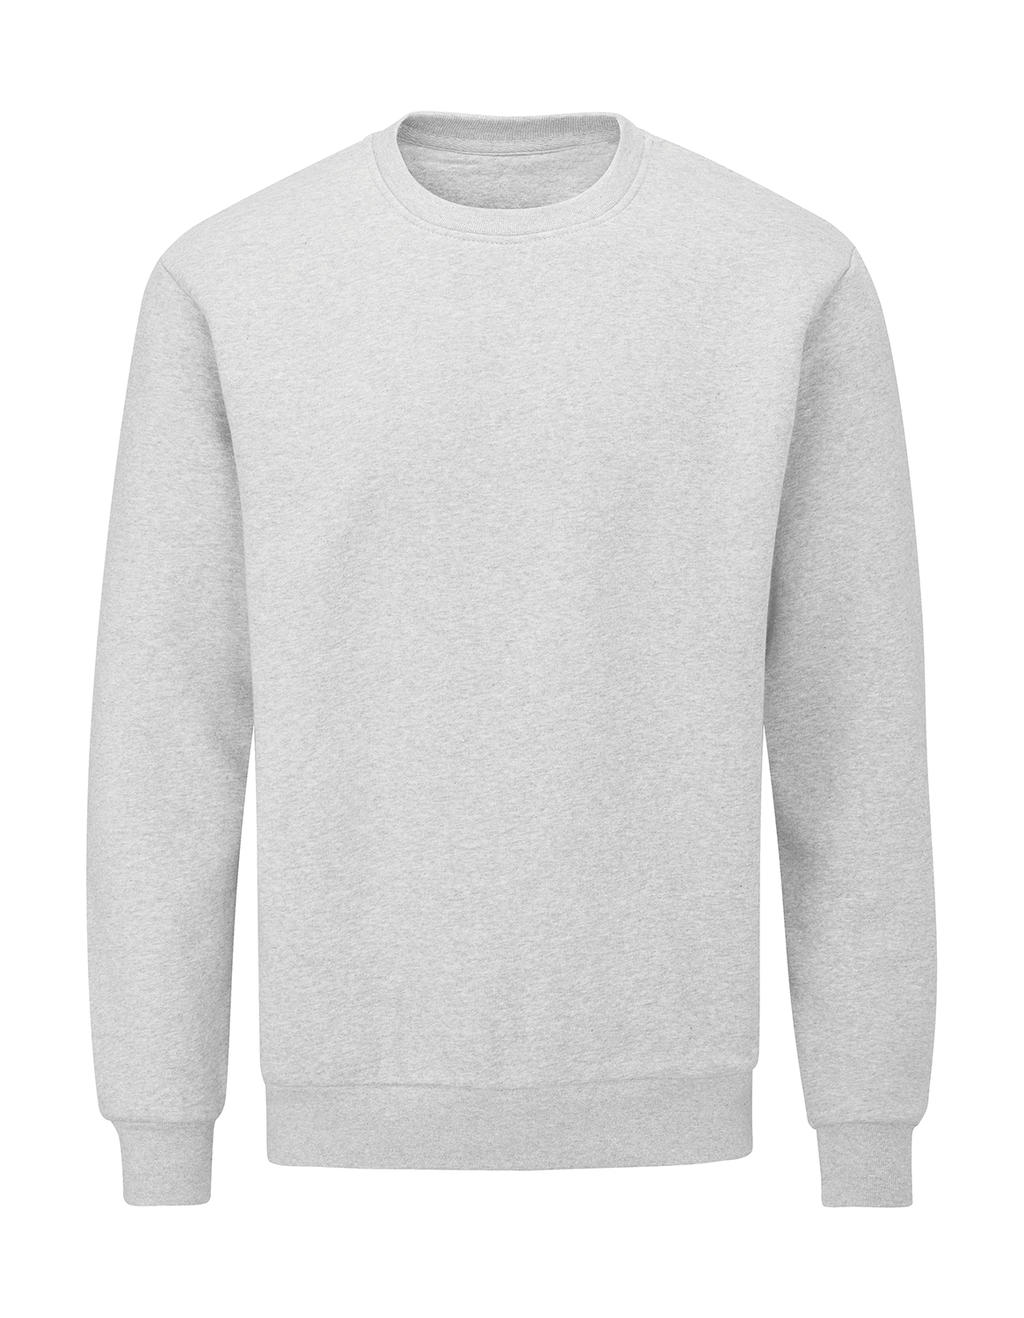  Essential Sweatshirt in Farbe Heather Grey Melange